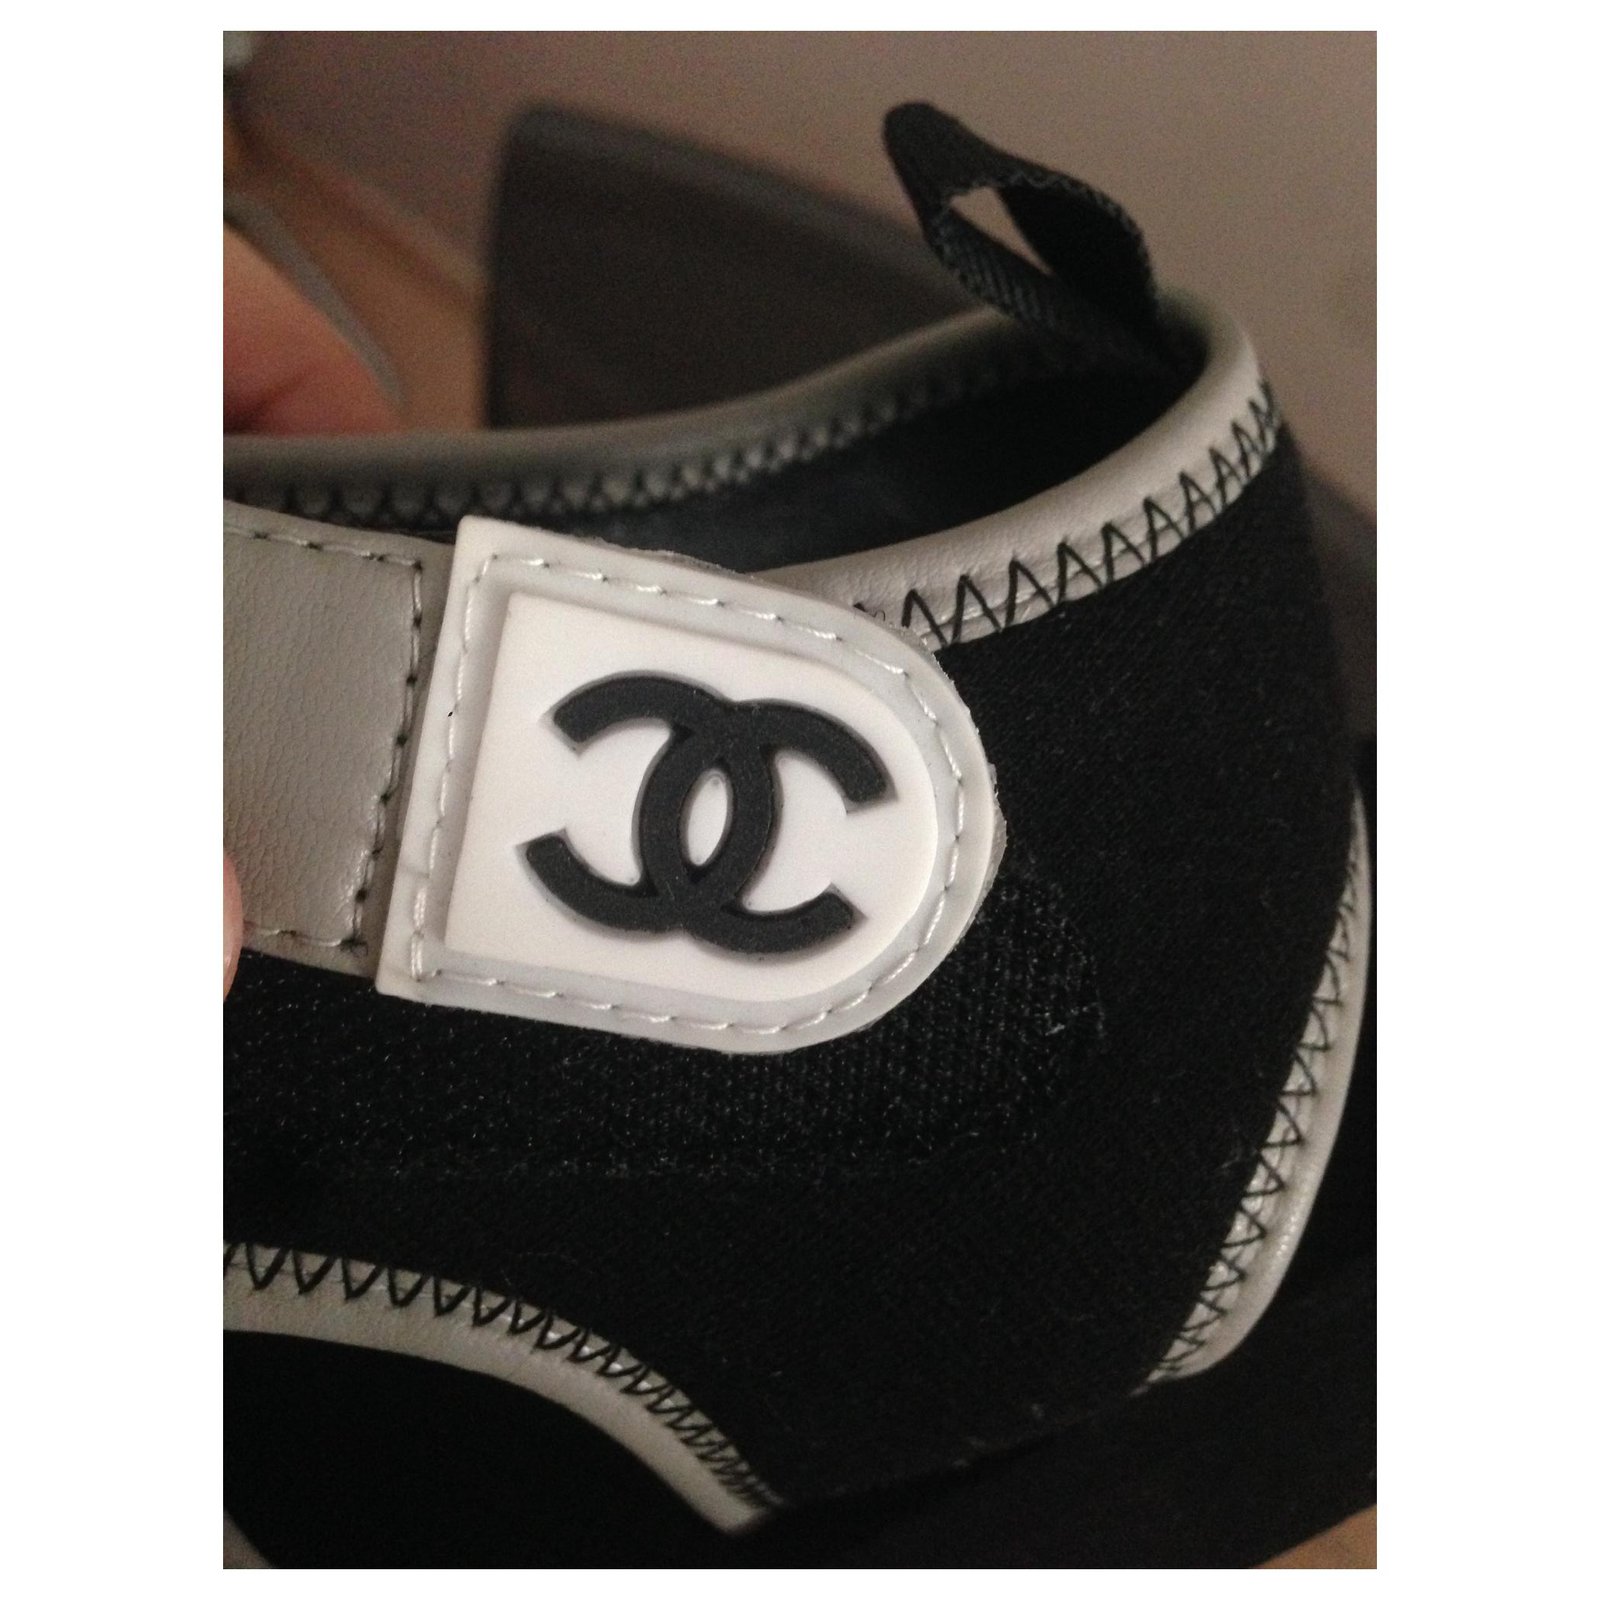 Chanel velcro sandals - Gem